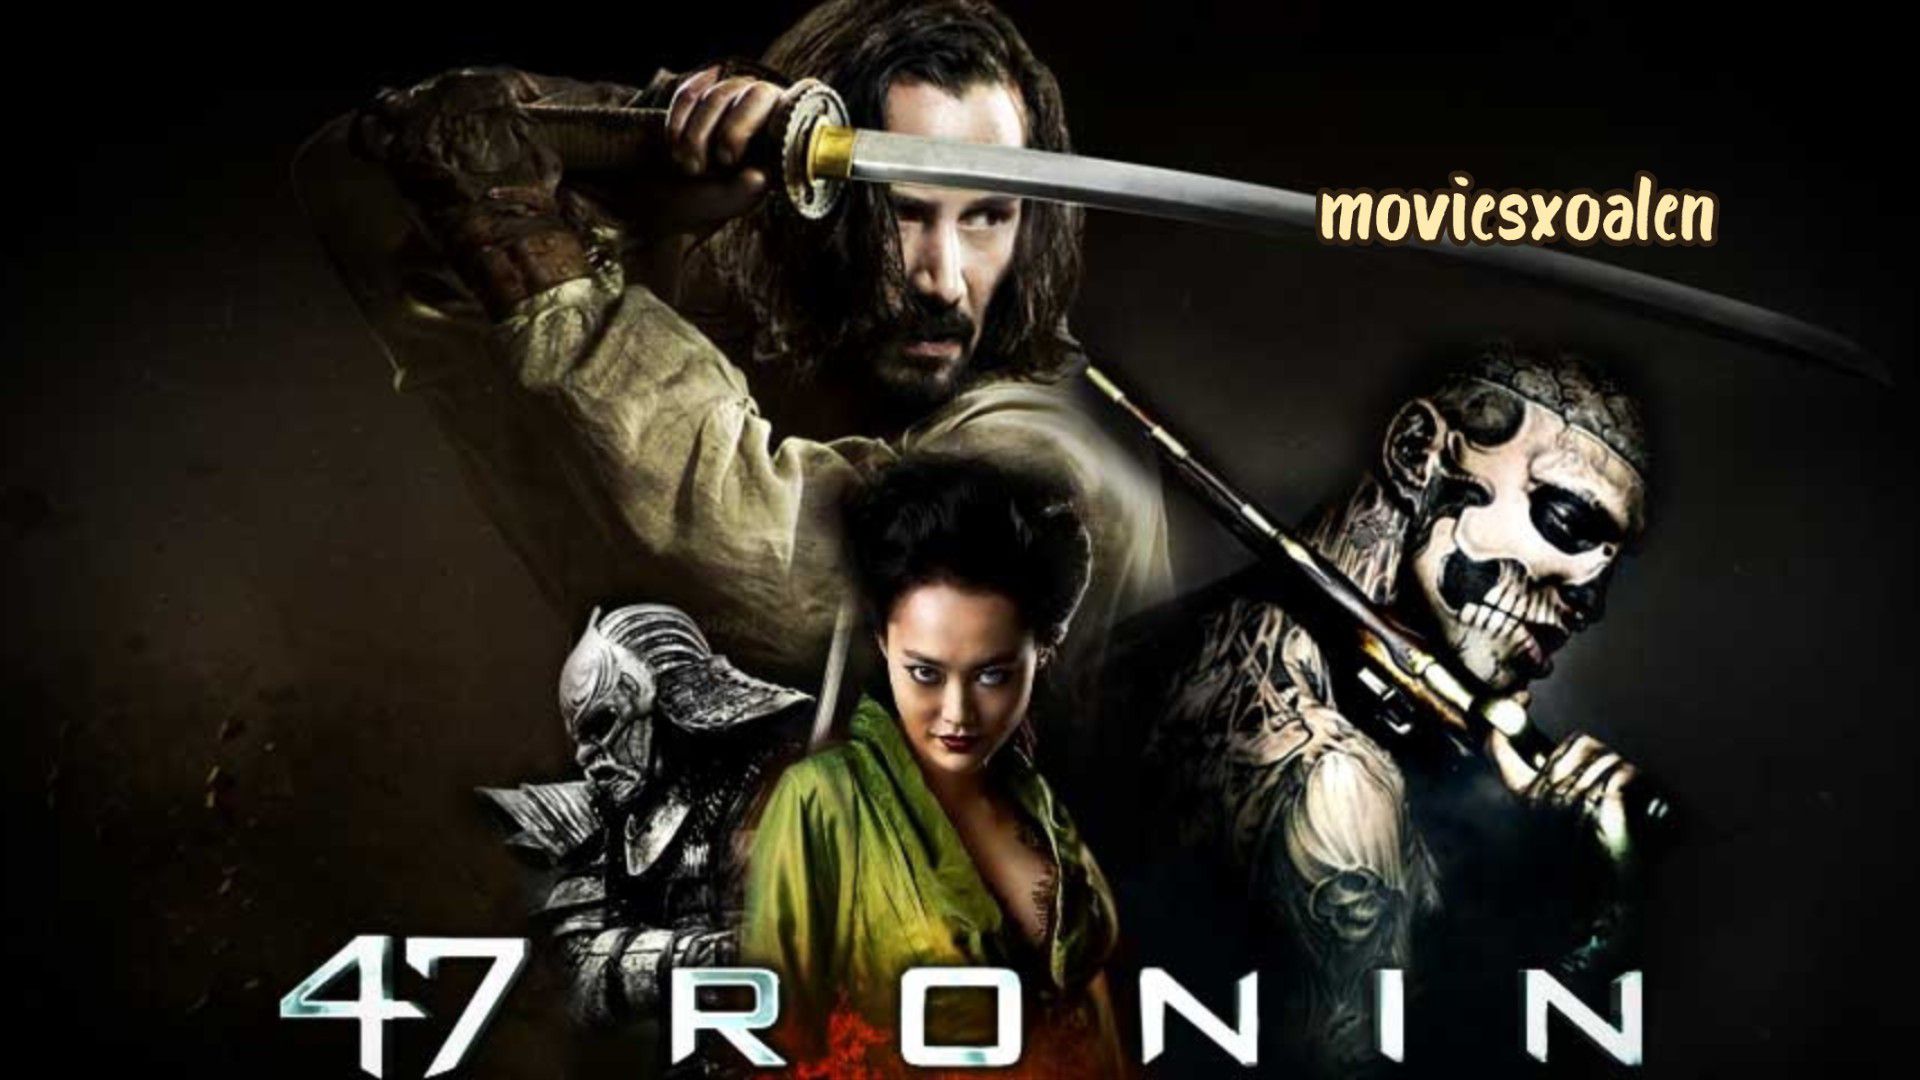 47 ronin movie poster